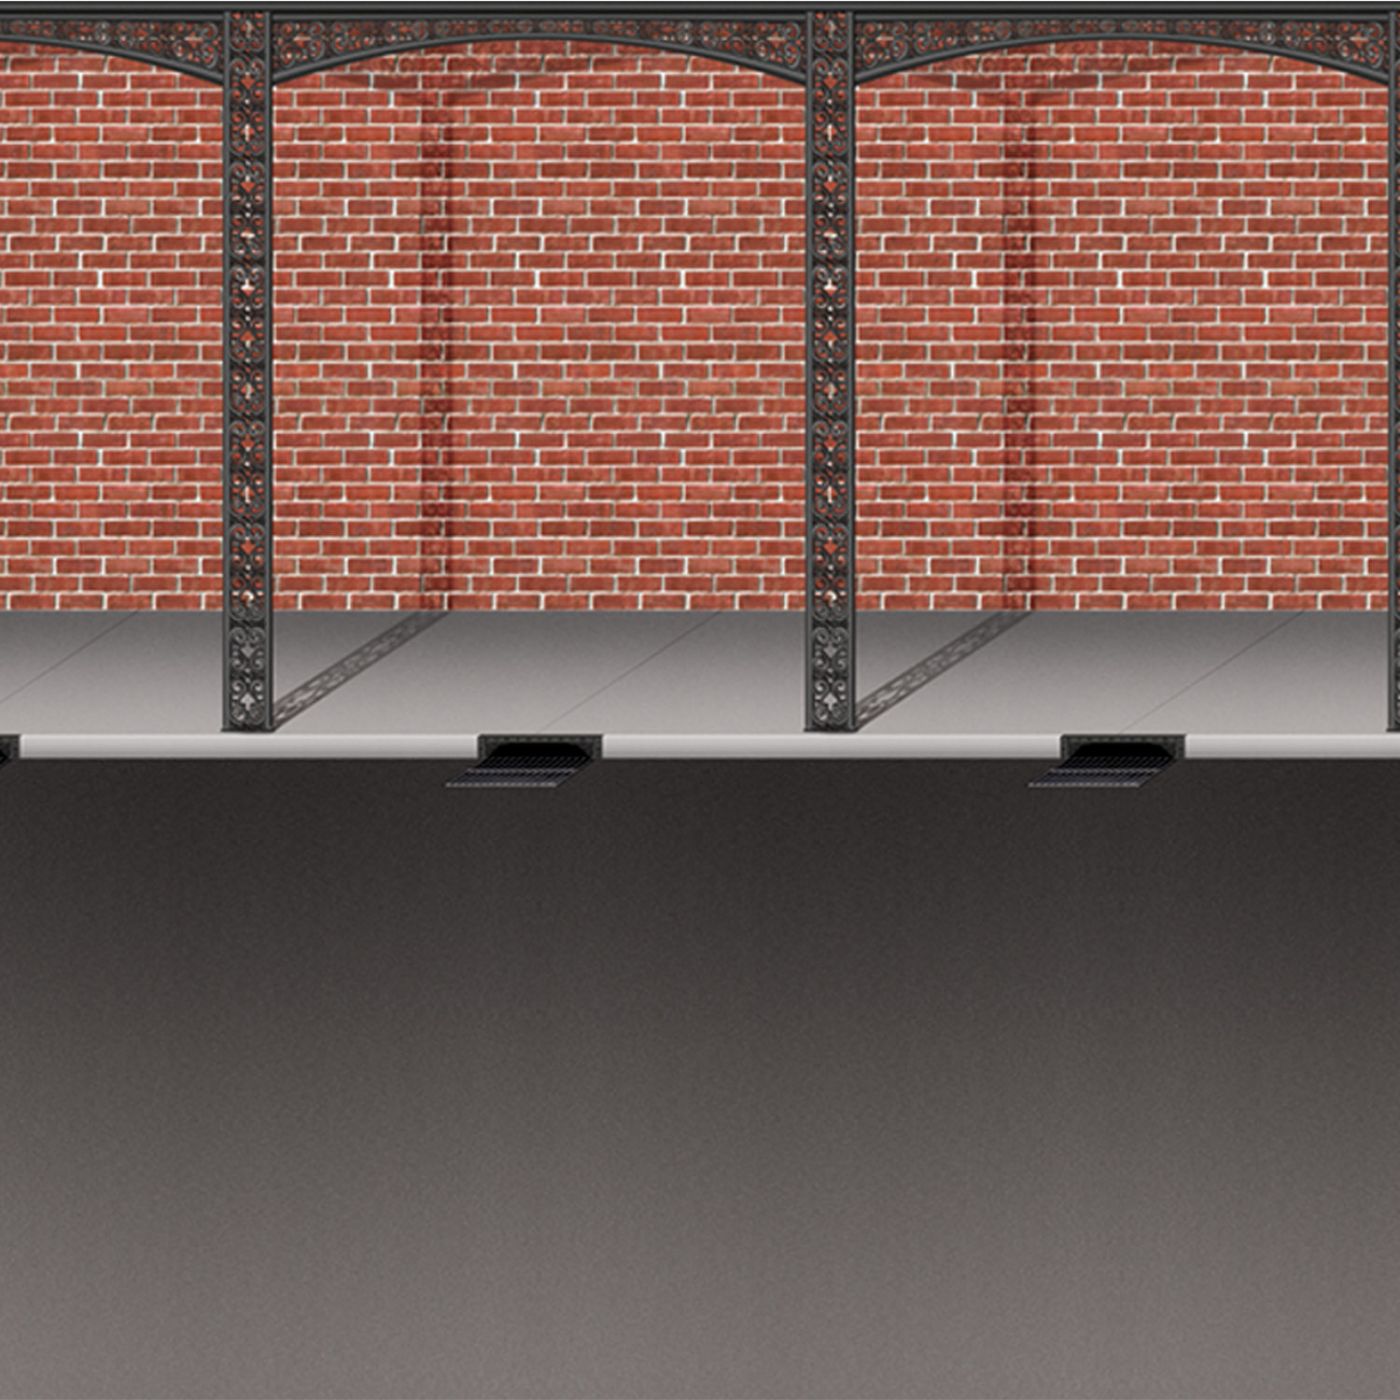 Mardi Gras Brick Wall & Street Backdrop (6) image